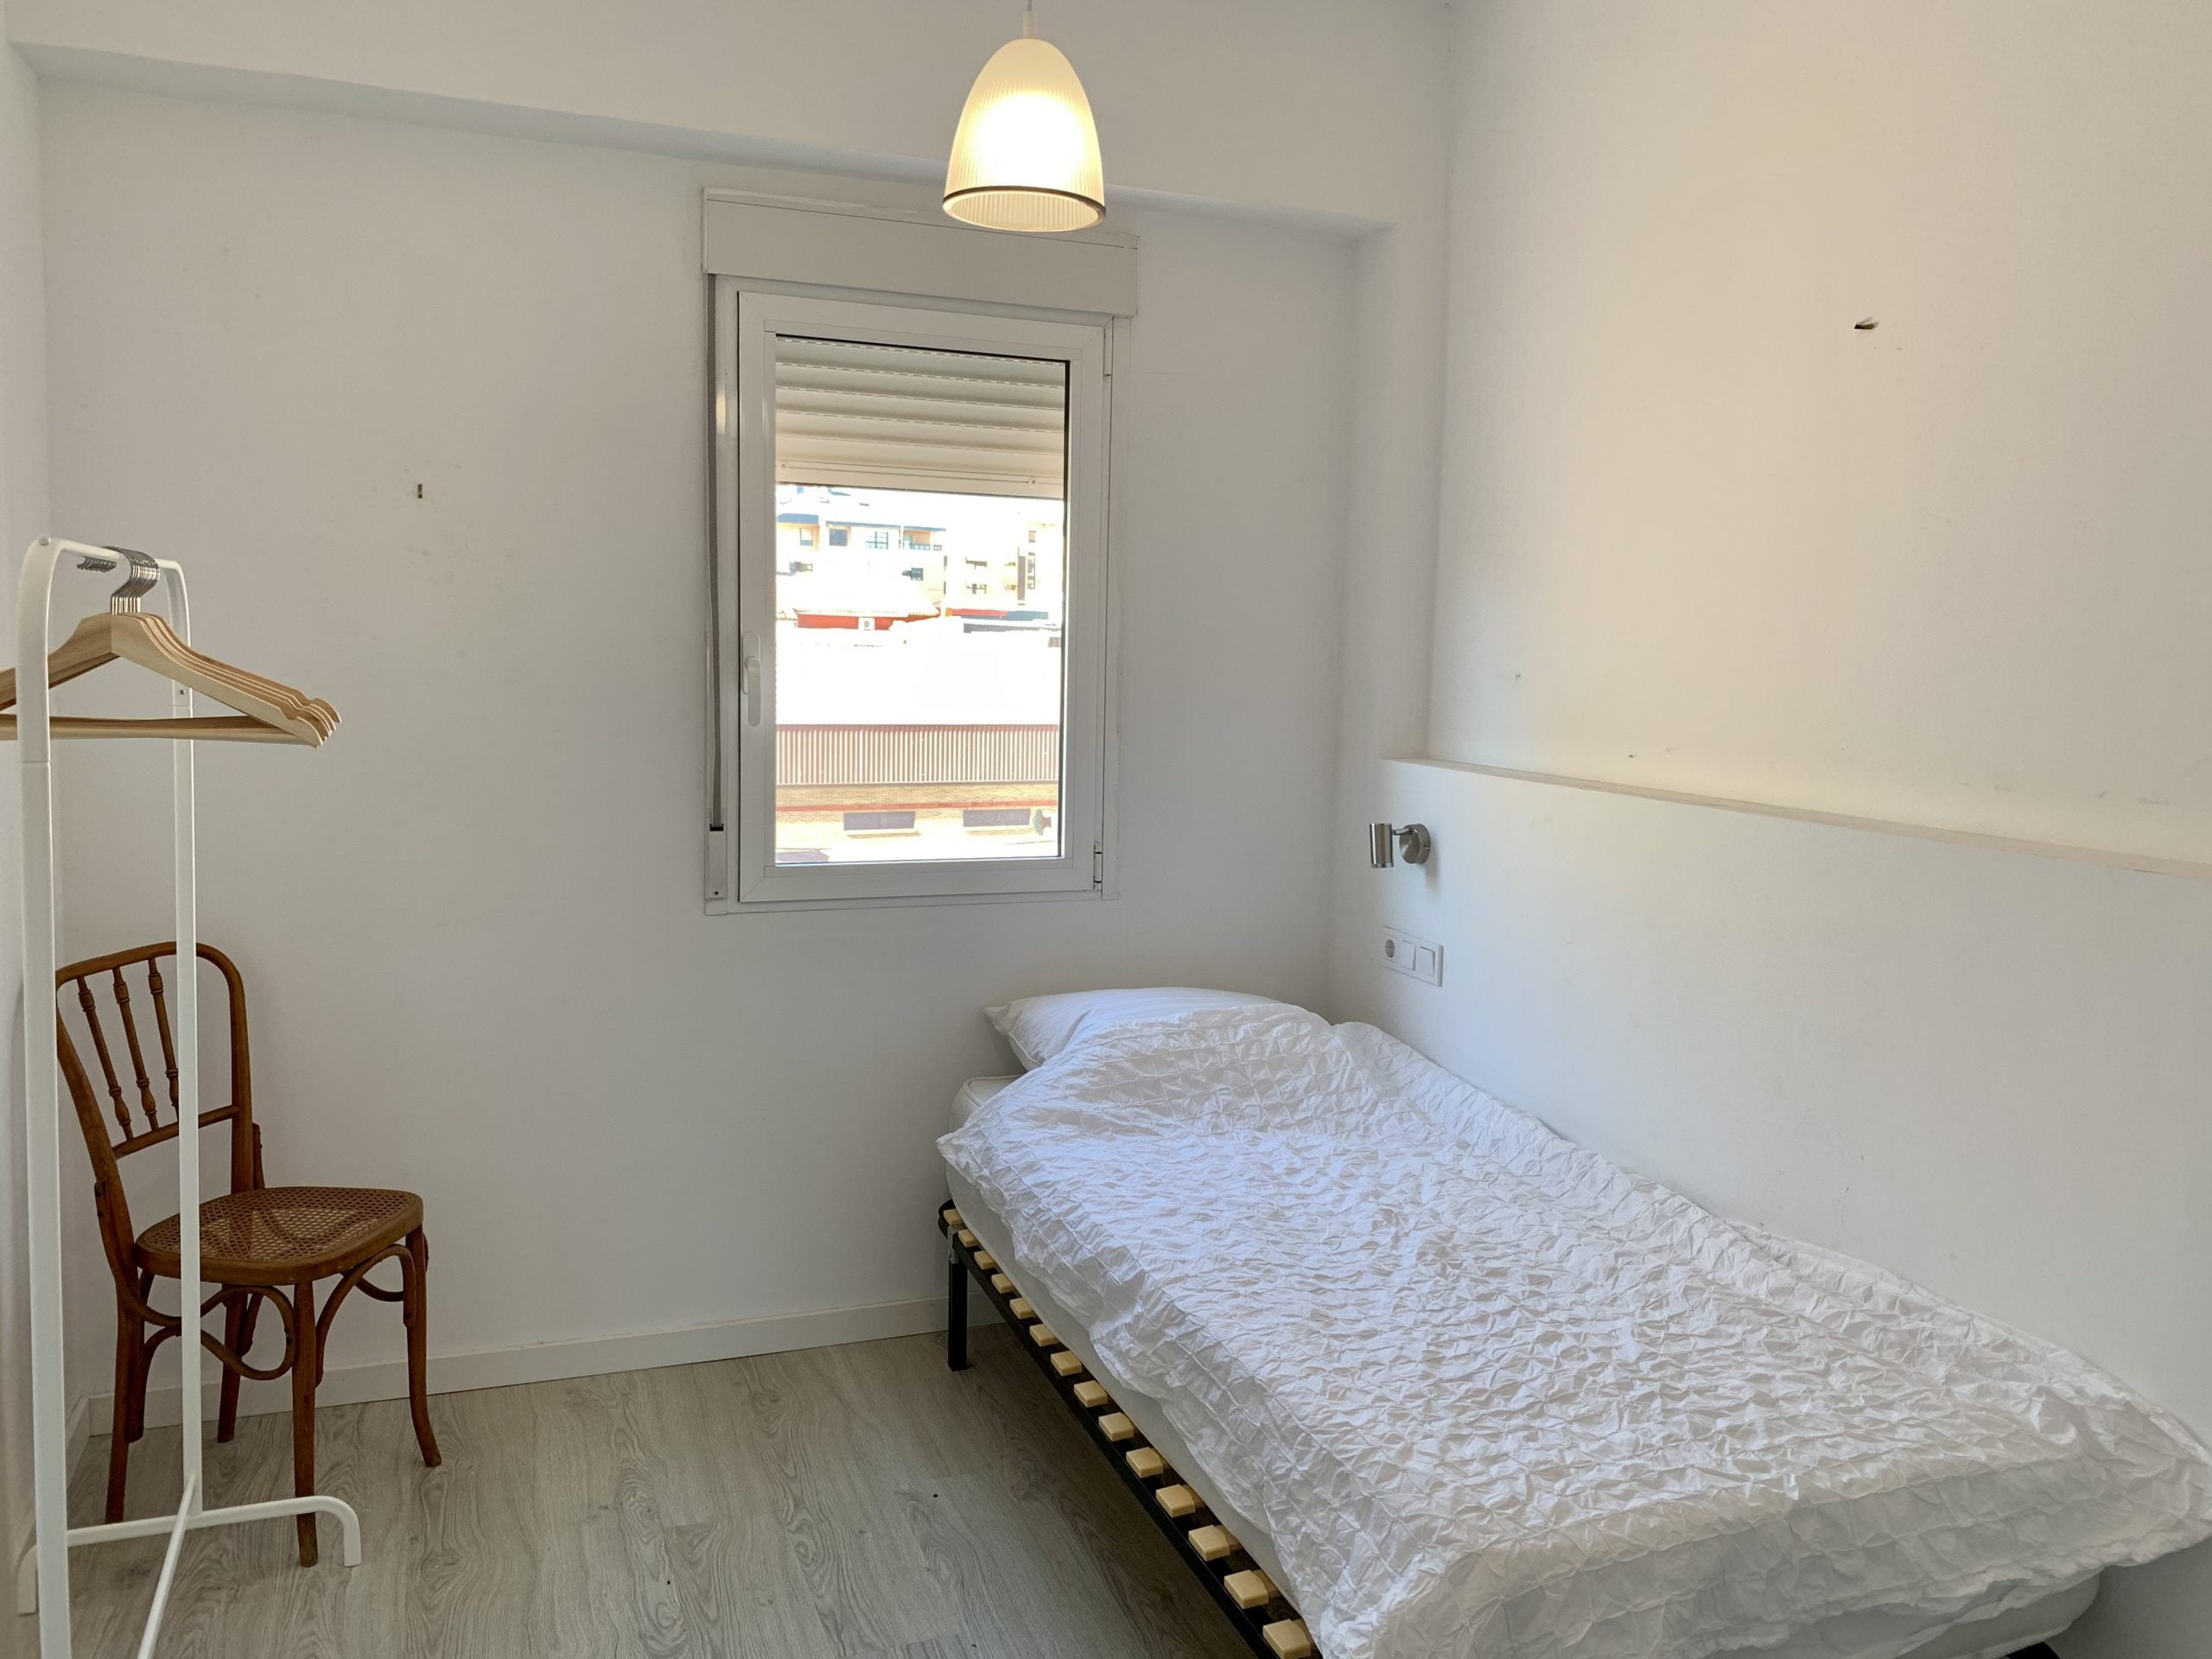 Brull - Spacious expat apartment in Valencia